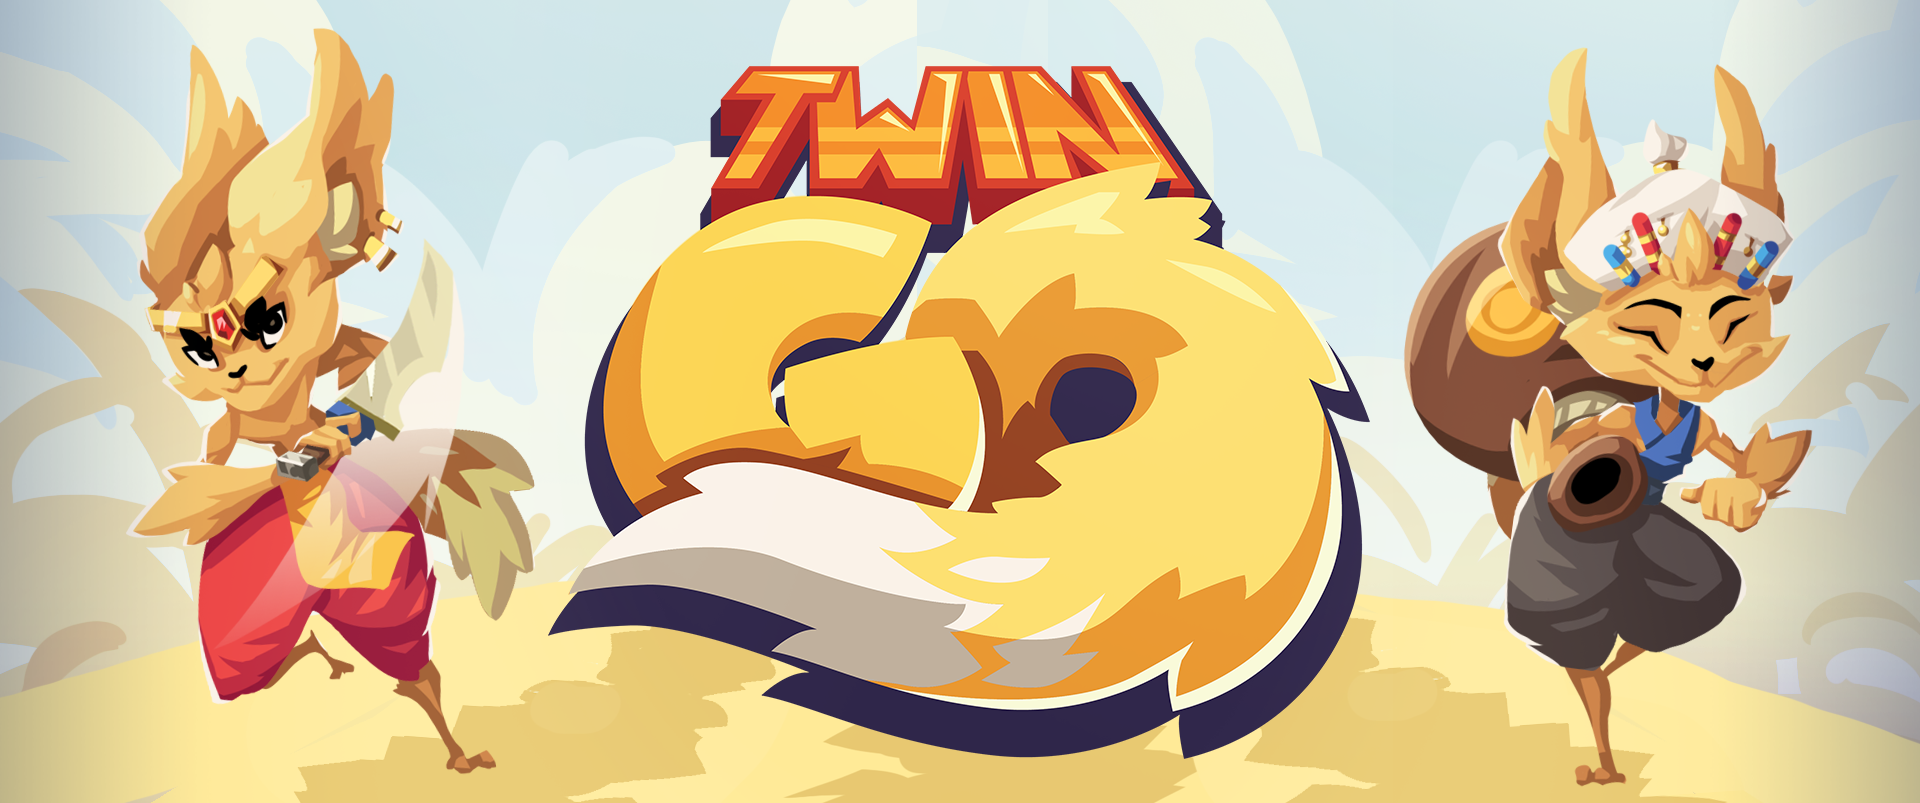 Twin GO